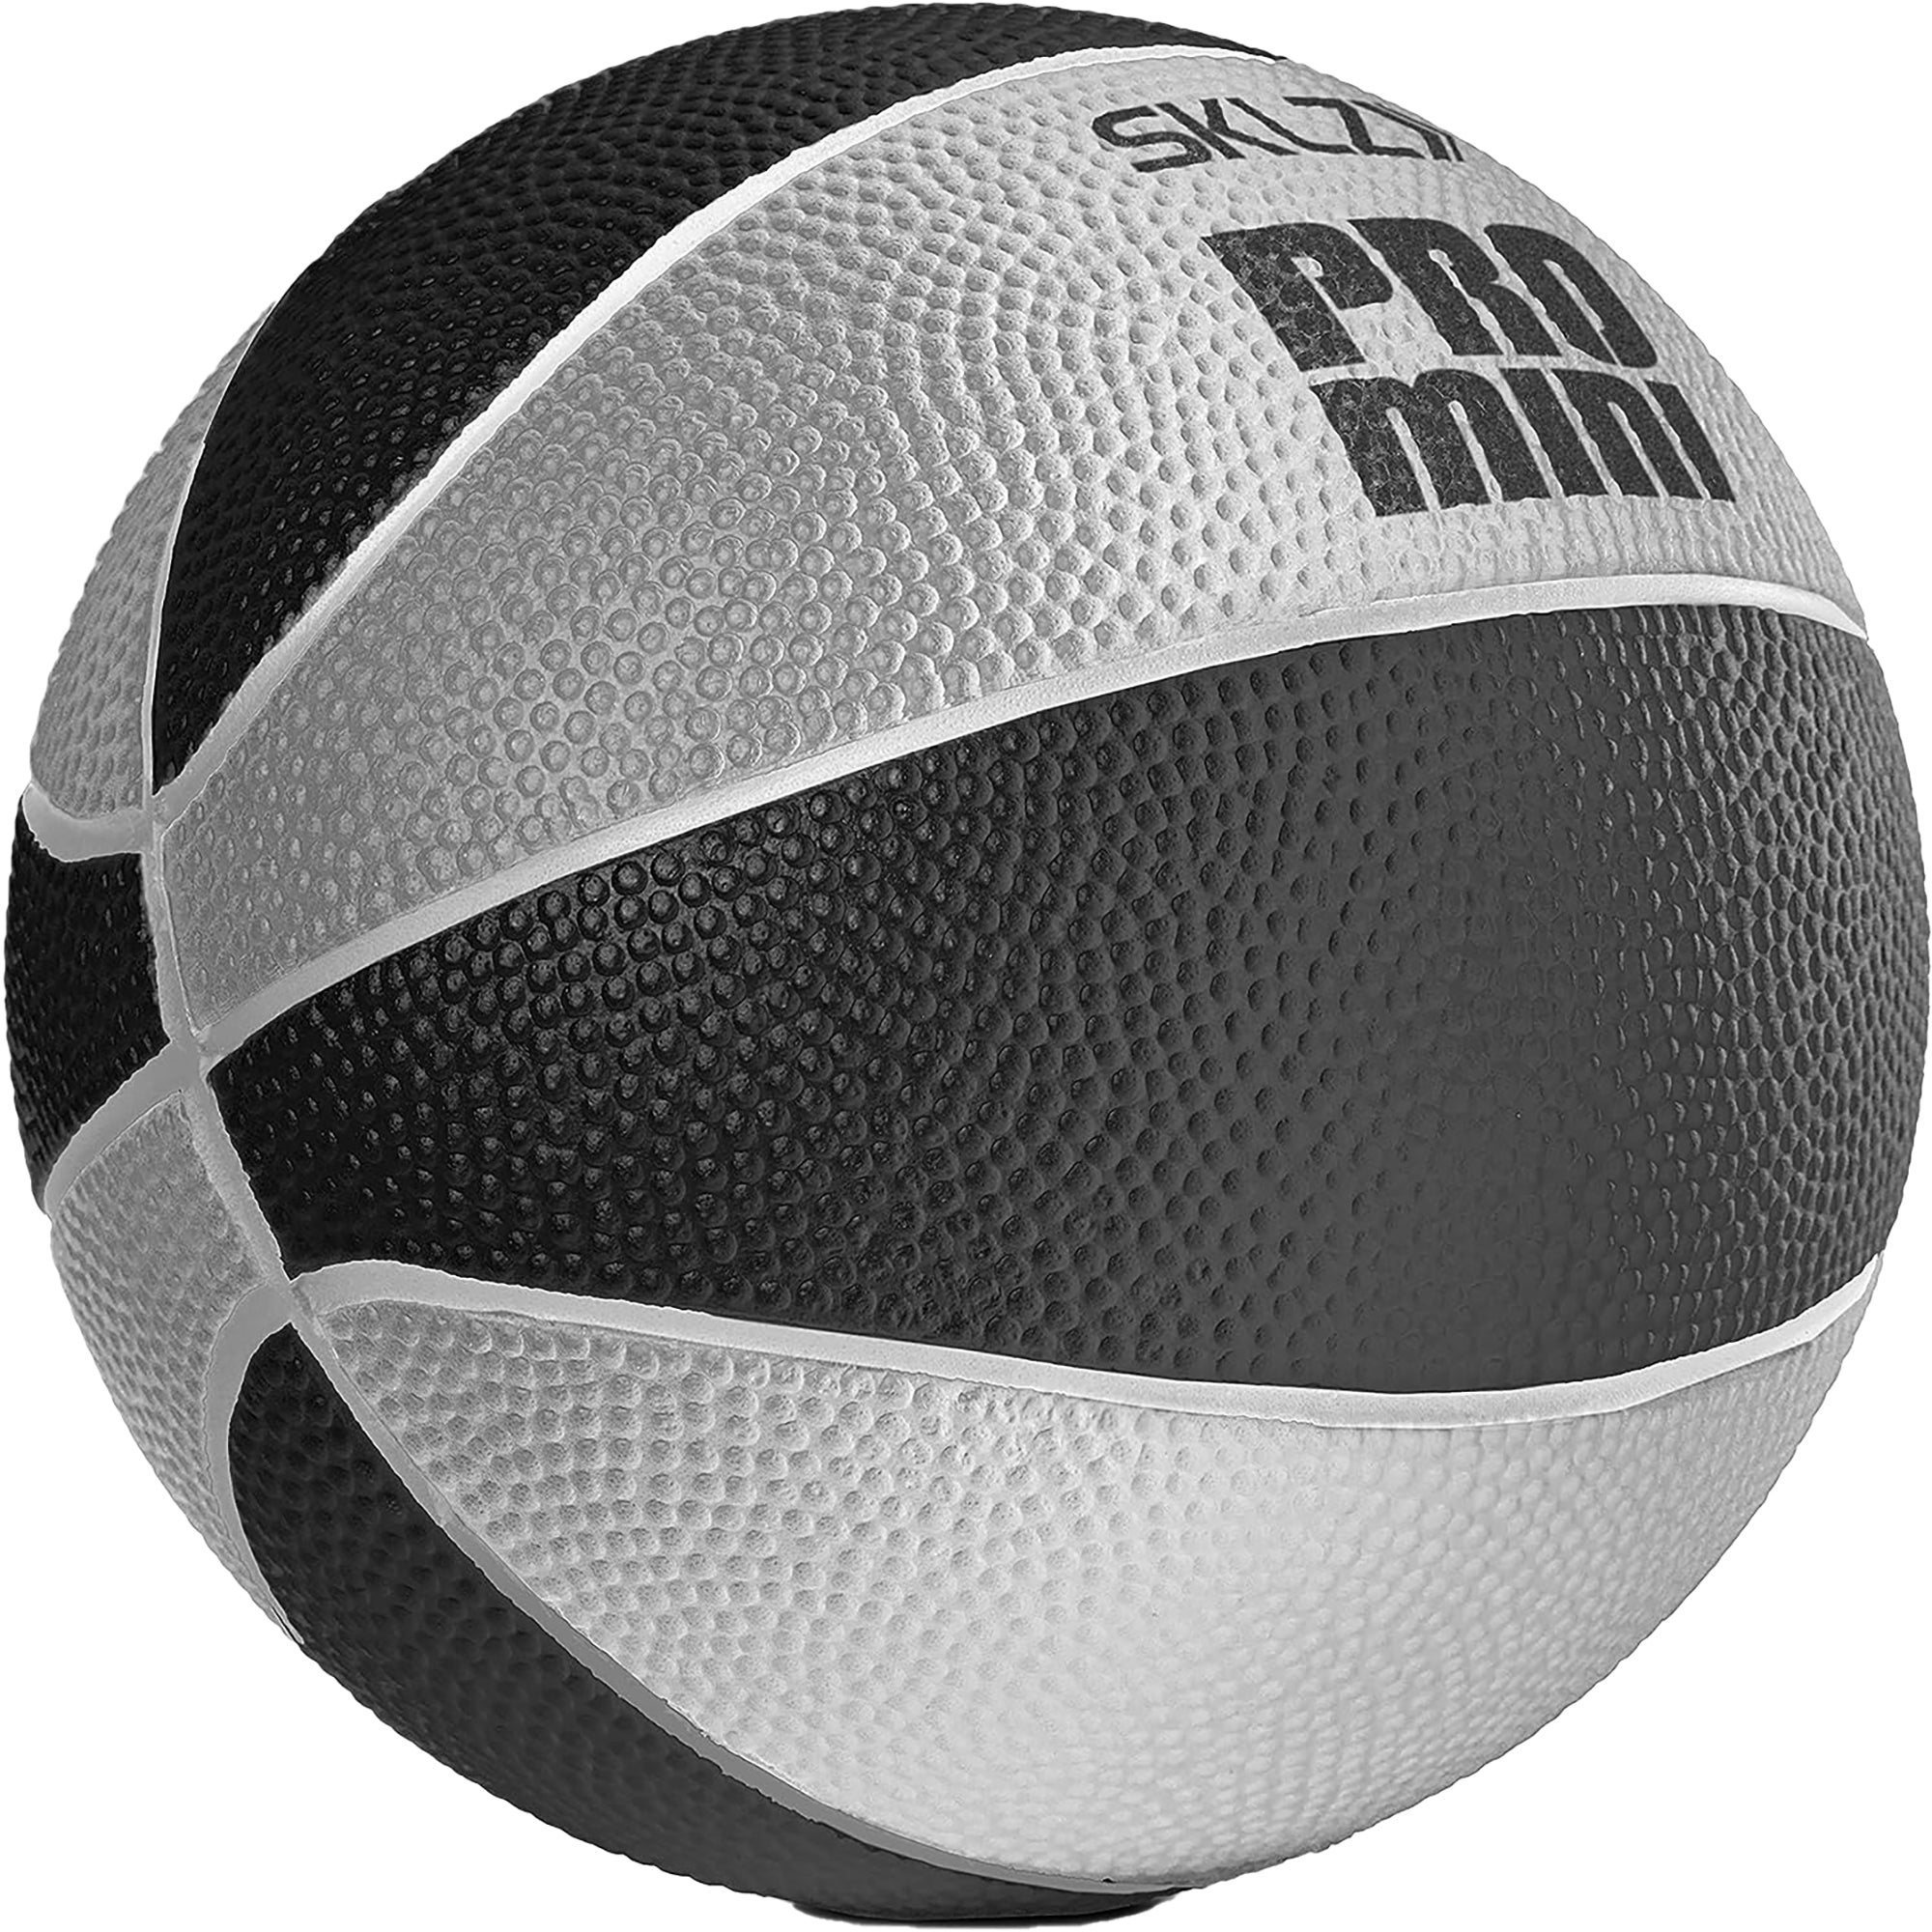 SKLZ 5" Pro Mini Hoop Swish Foam Basketball - Black/Silver SKLZ